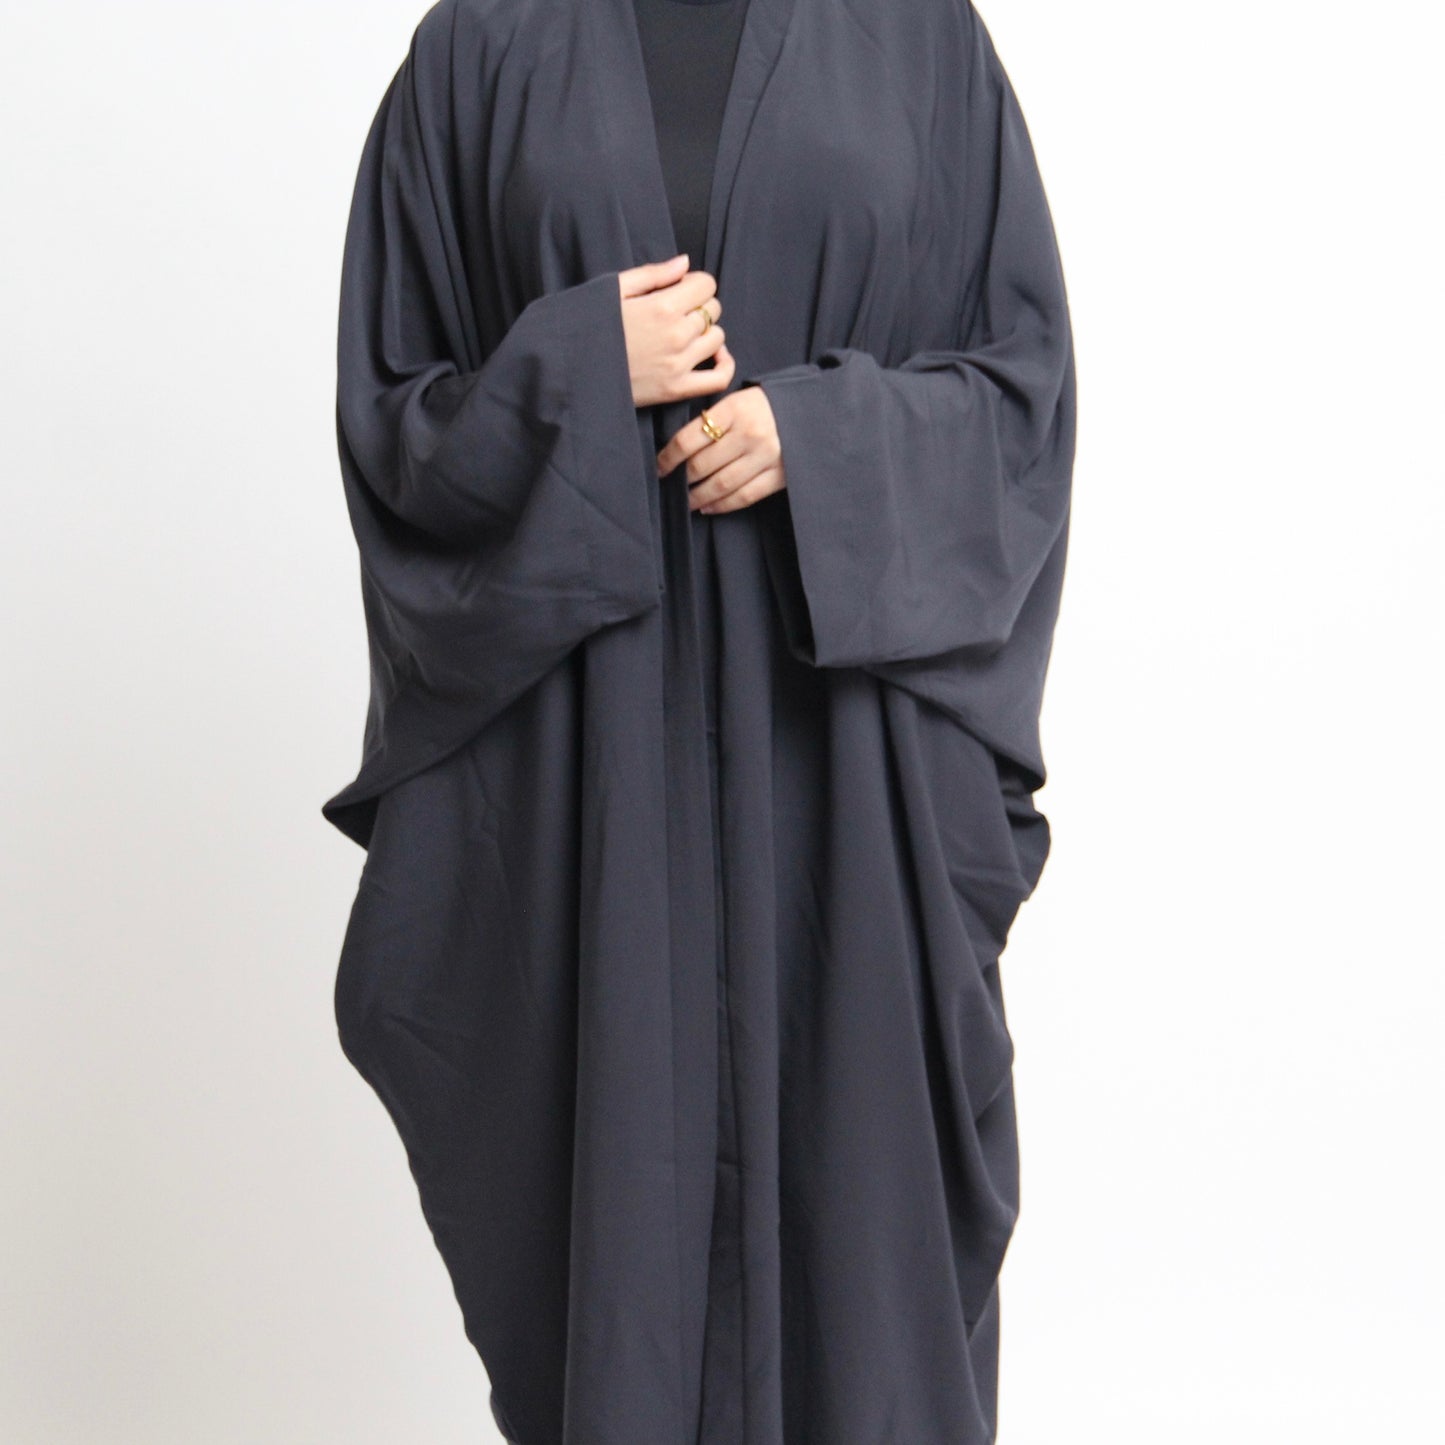 Nahla’s Open Cloak Abaya Navy Grey